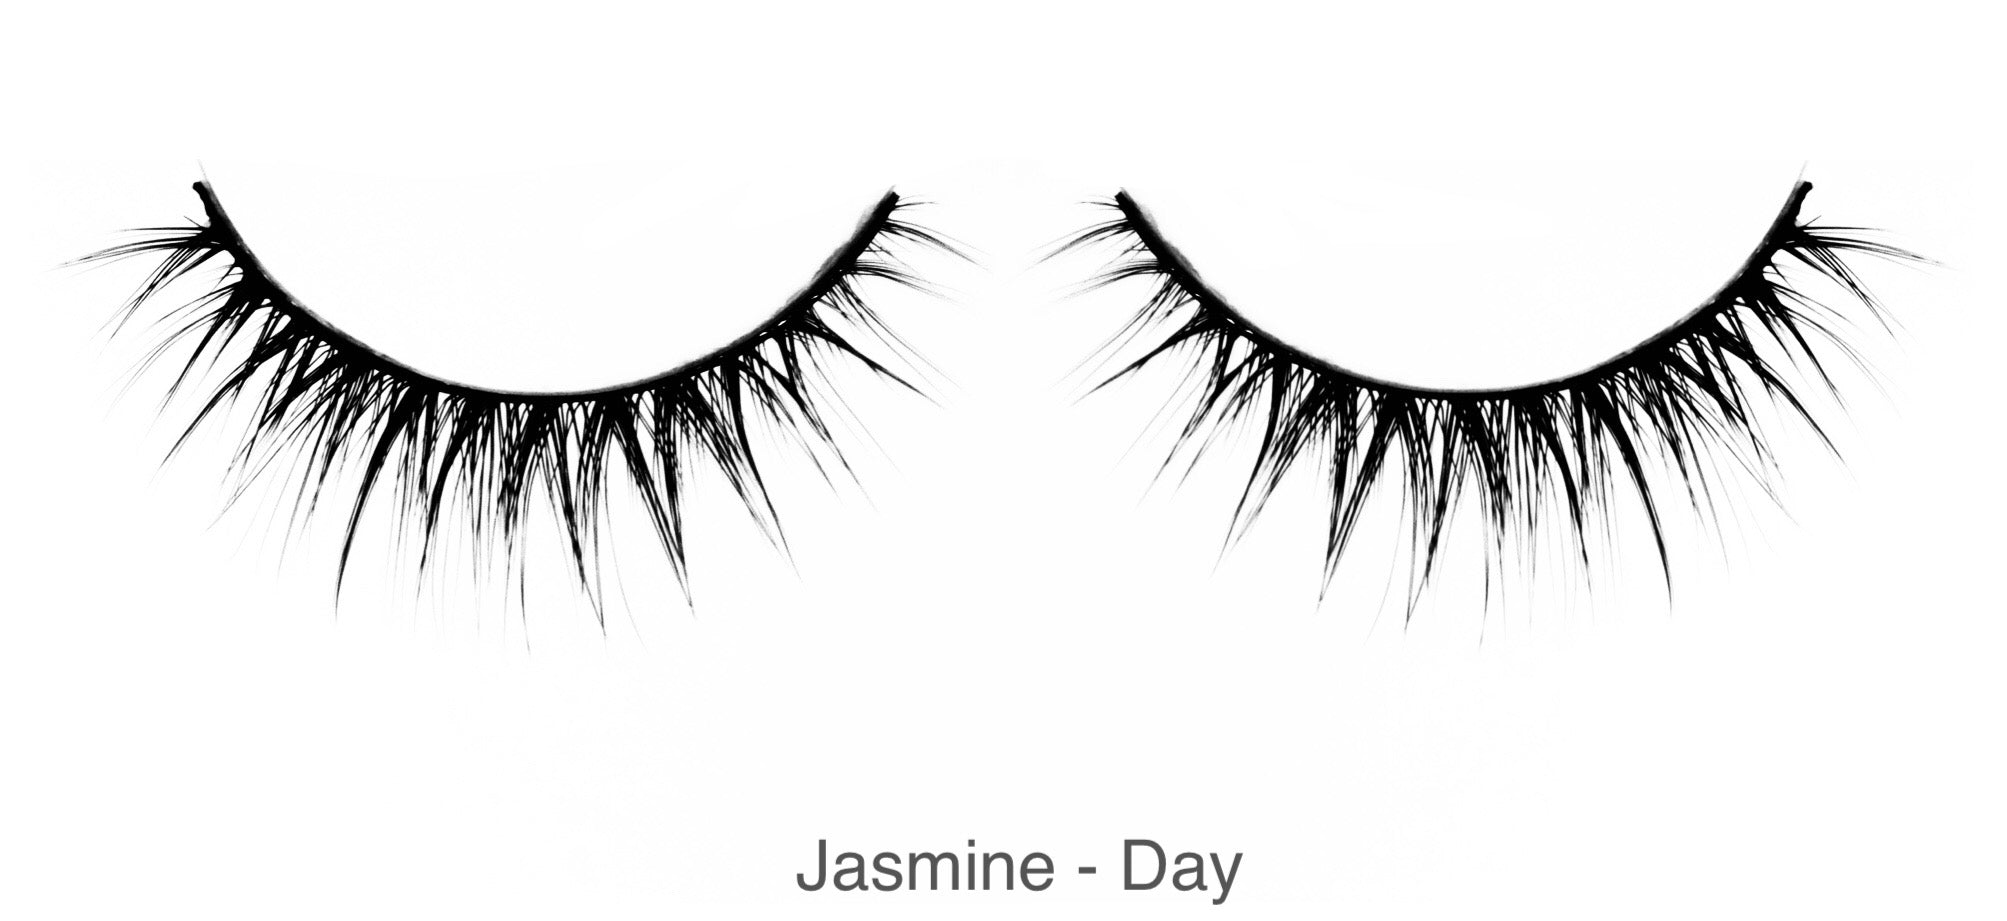 Jasmine - Day